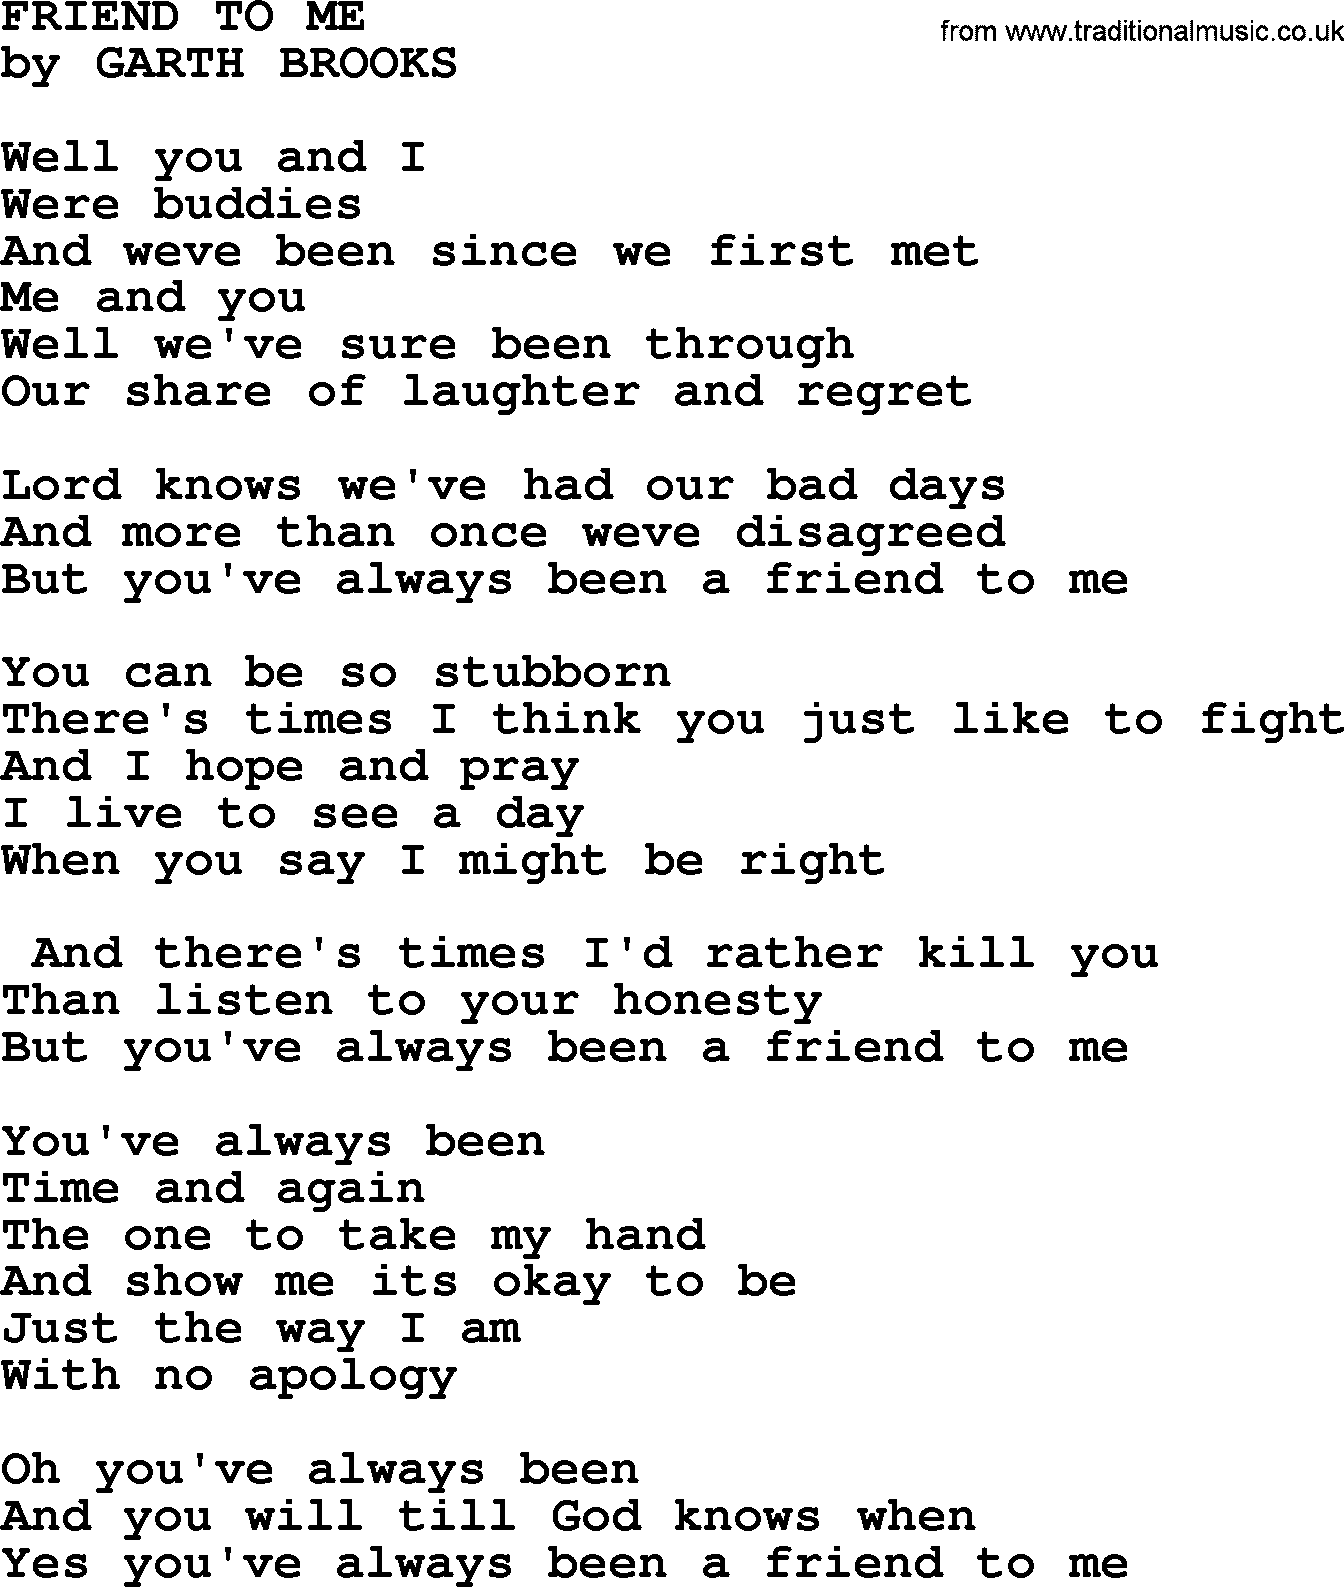 Garth Brooks song: Friend To Me, lyrics